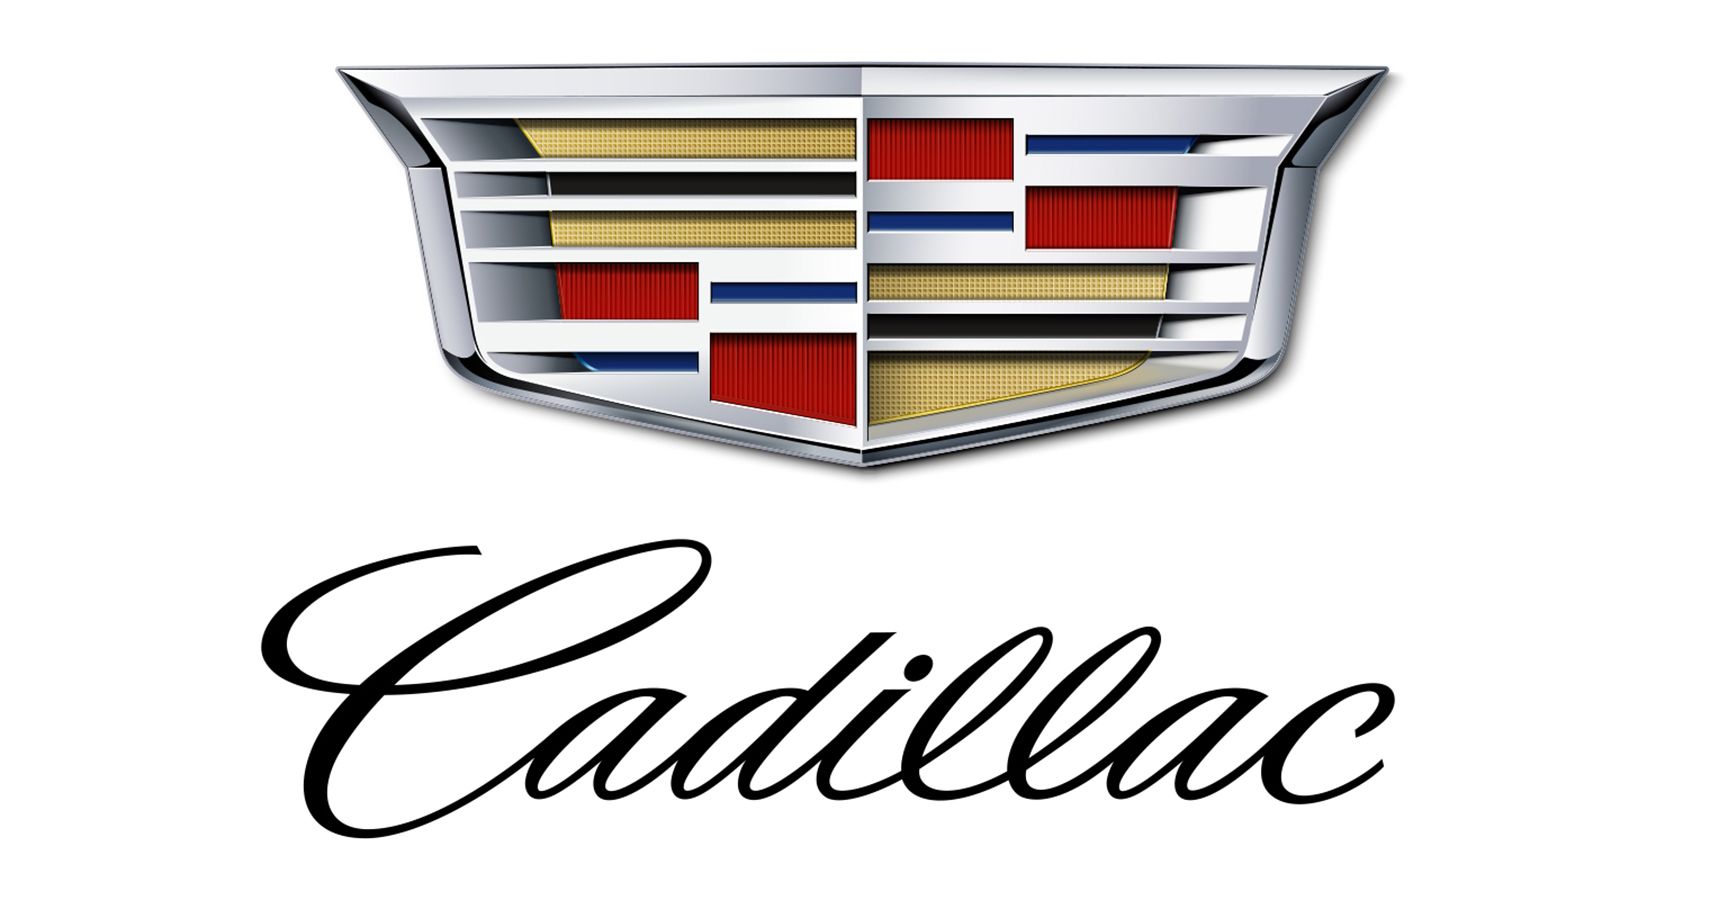 Cadillac logo and script